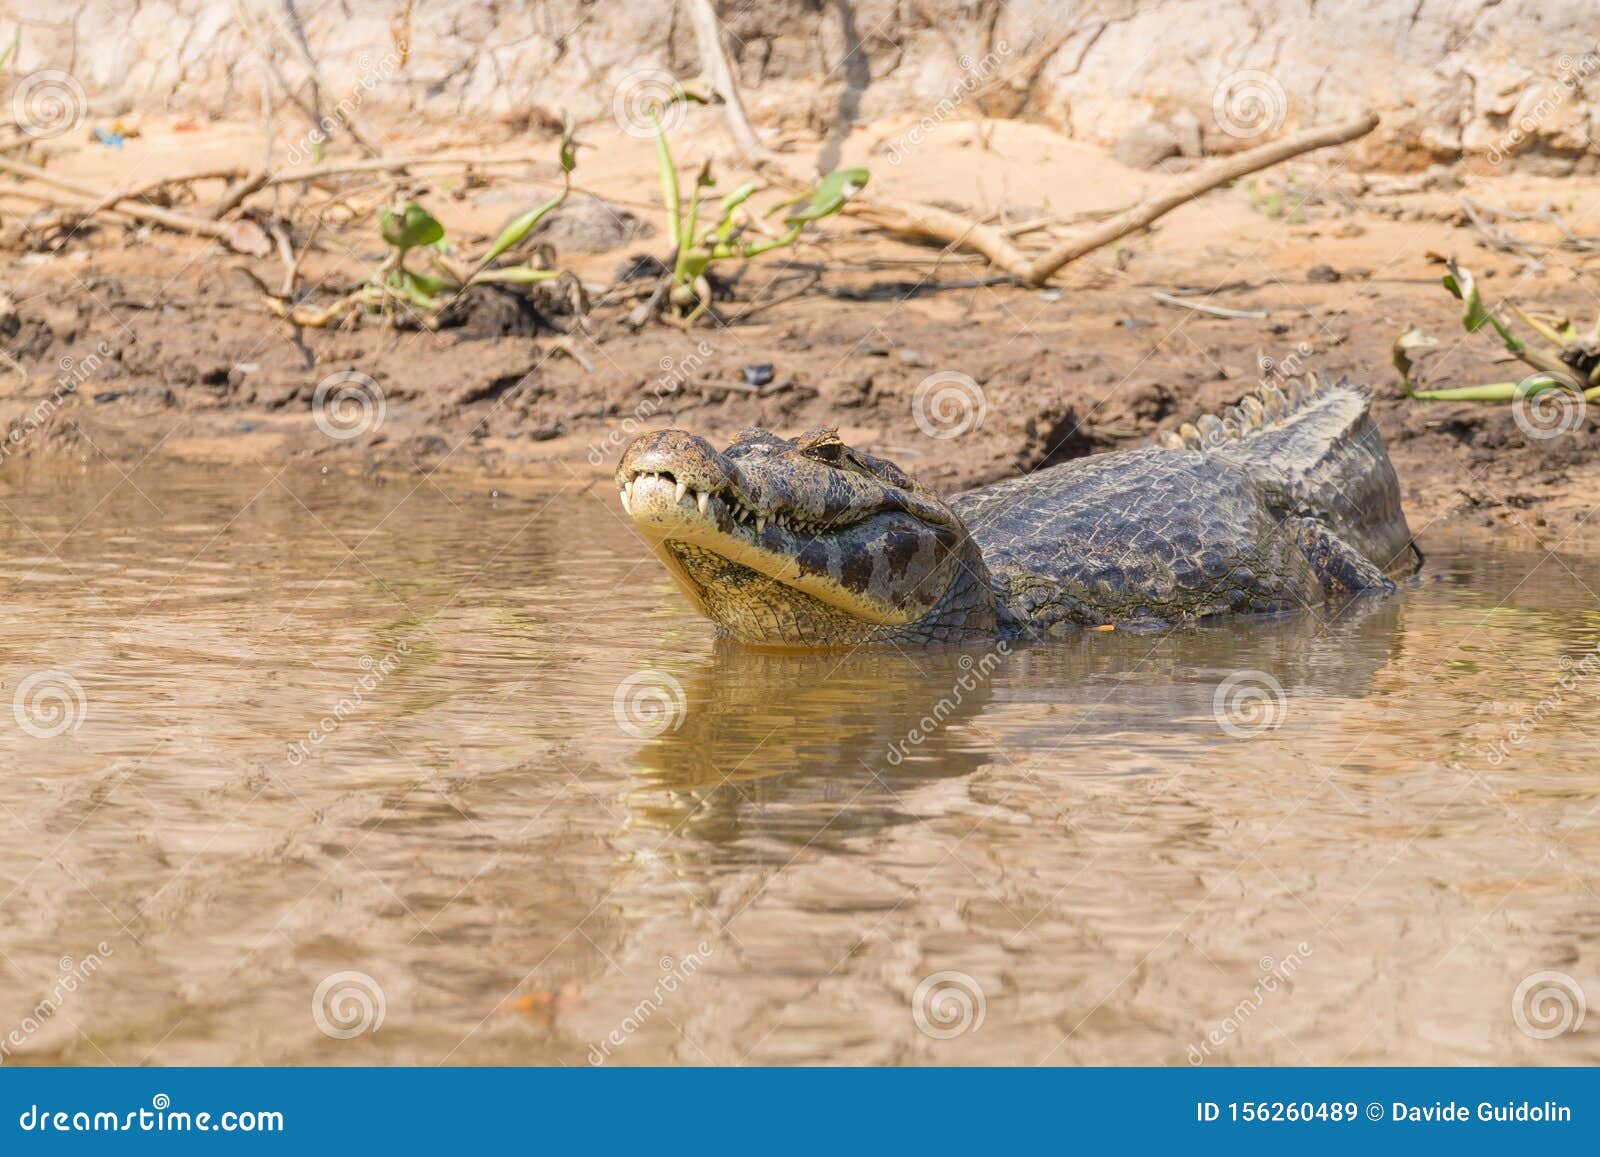 caiman floating on pantanal, brazil